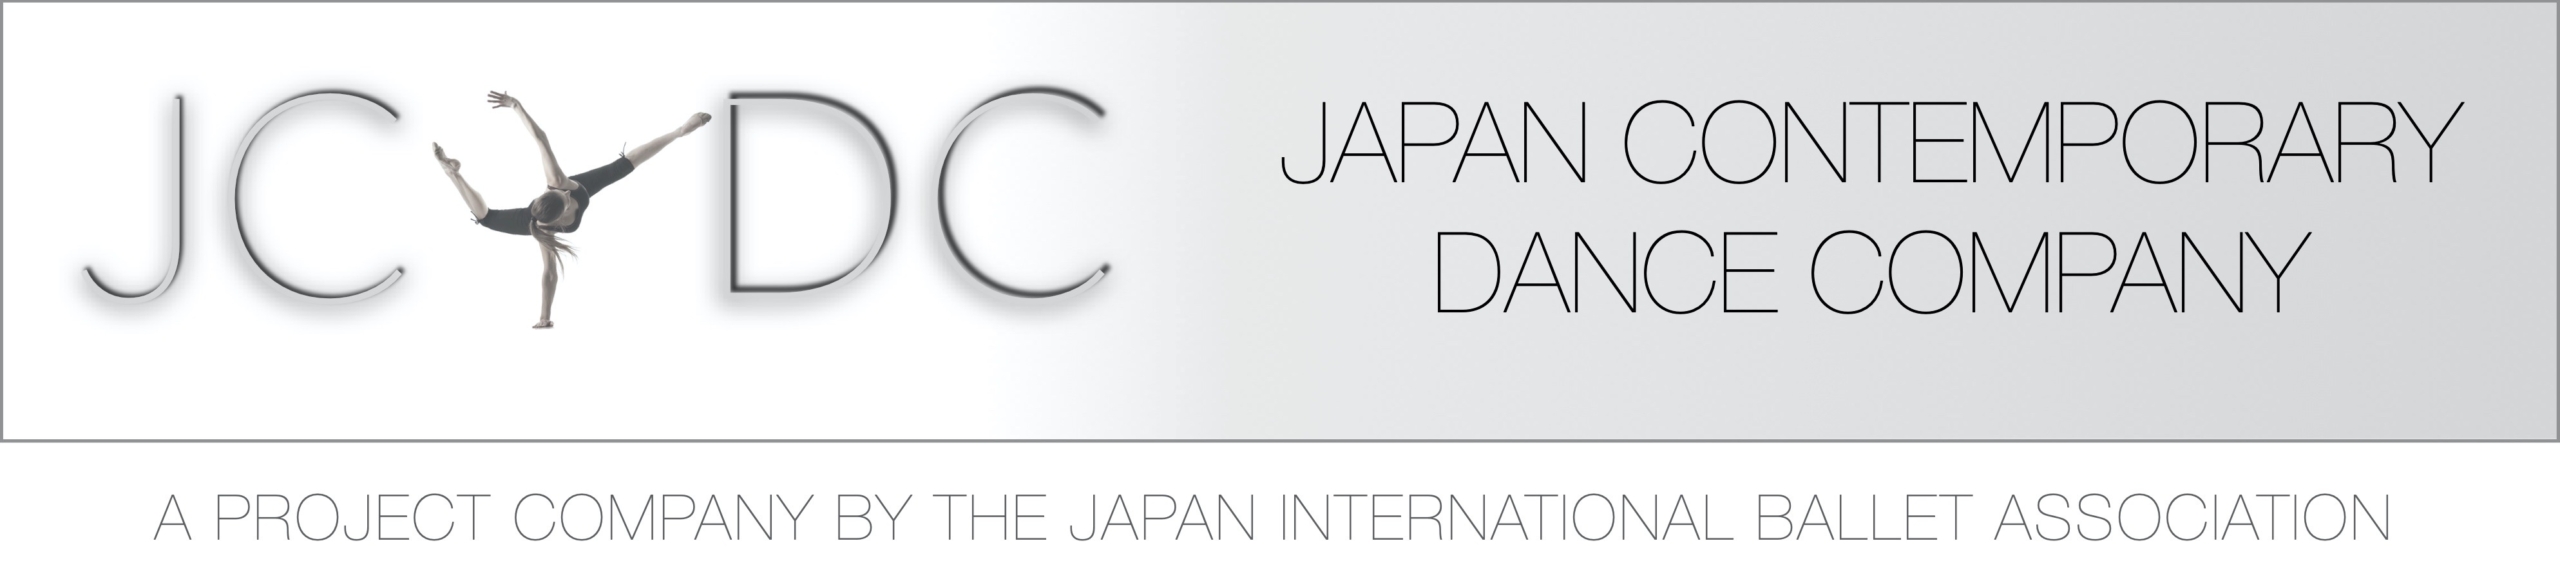 Japan Contemporary Dance Company